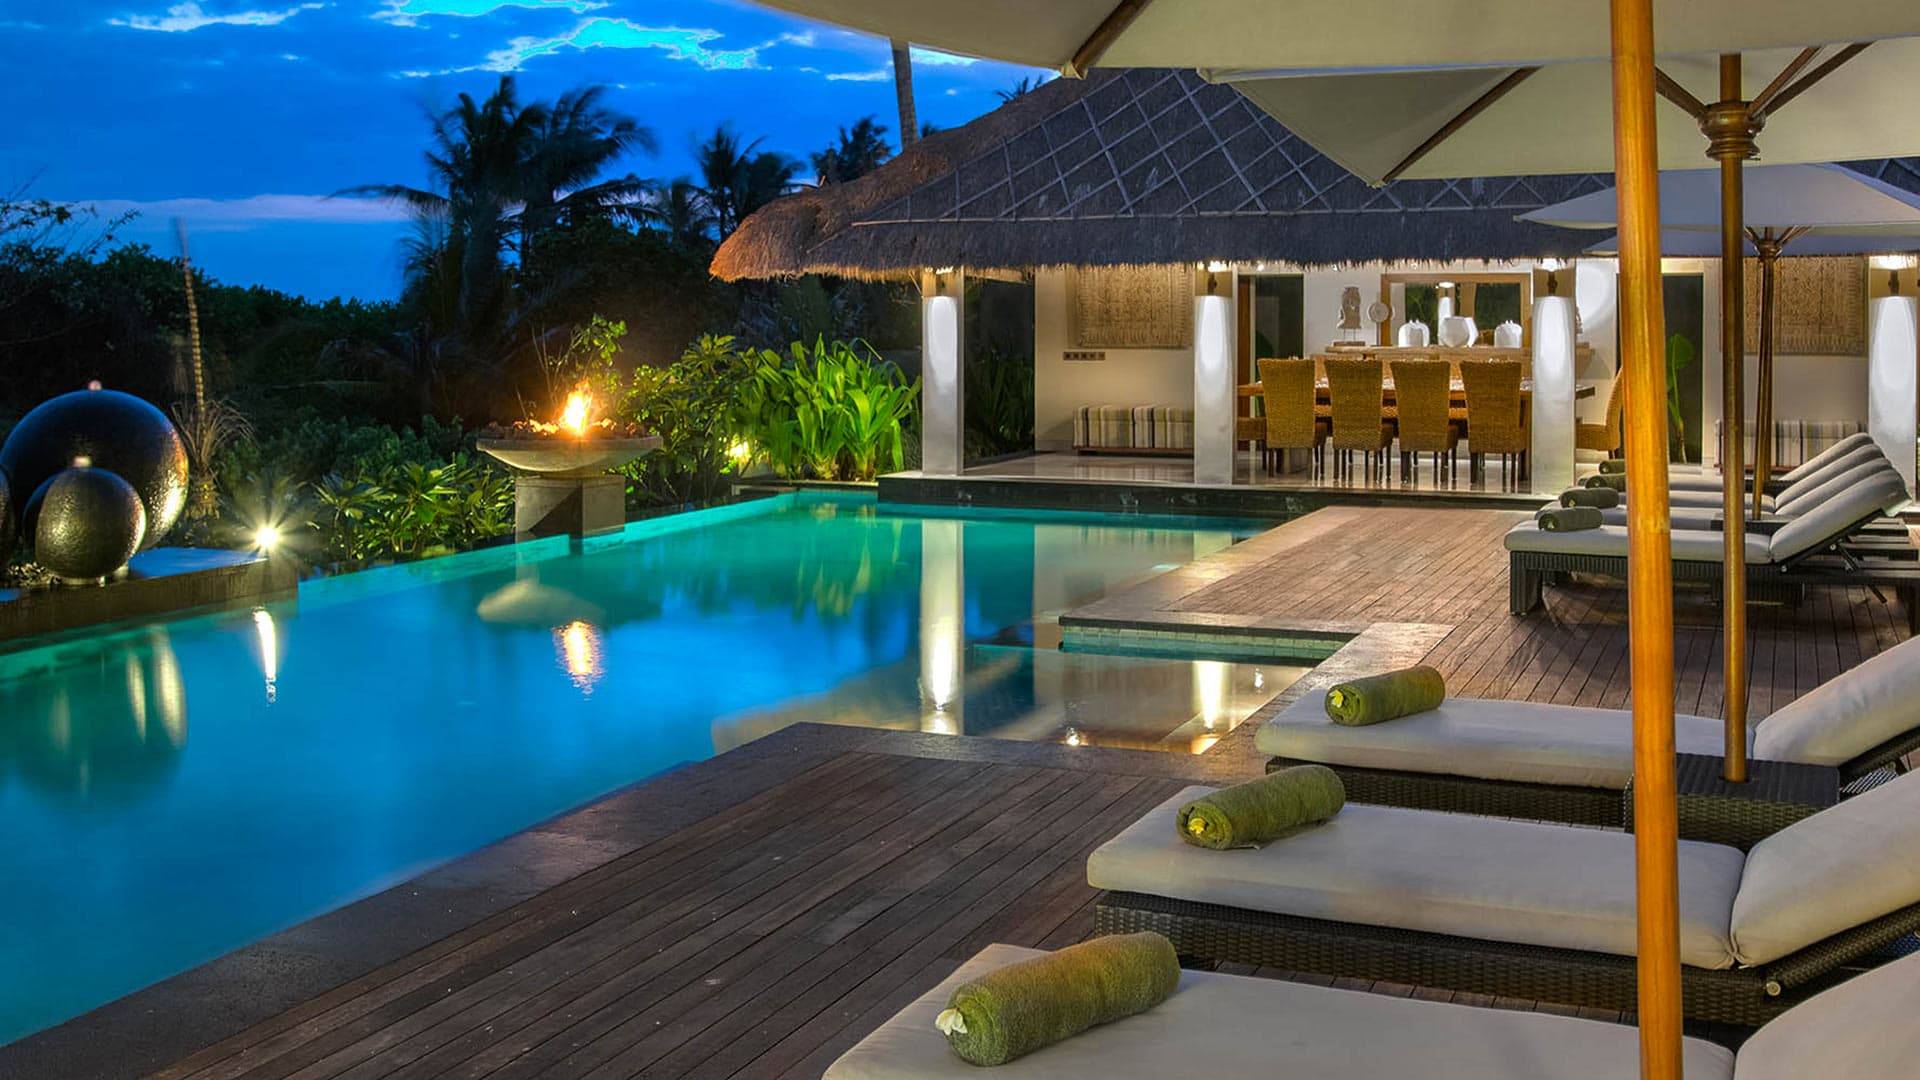 Bali emerald villas sanur, bali - bali emerald villas review, photos